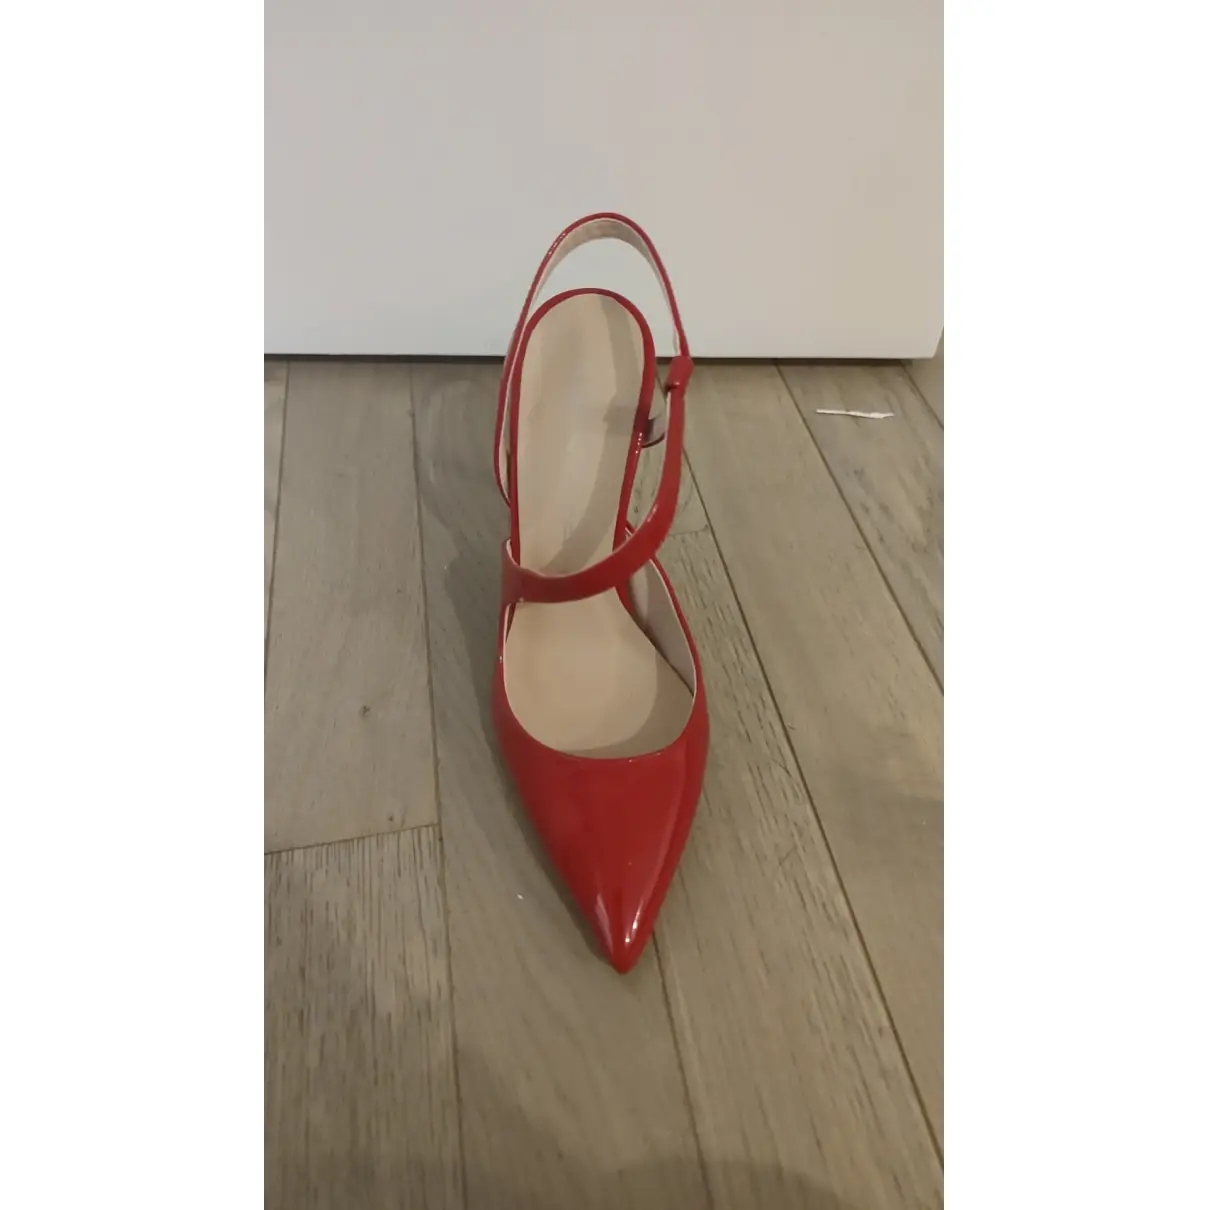 Buy Identita Leather heels online